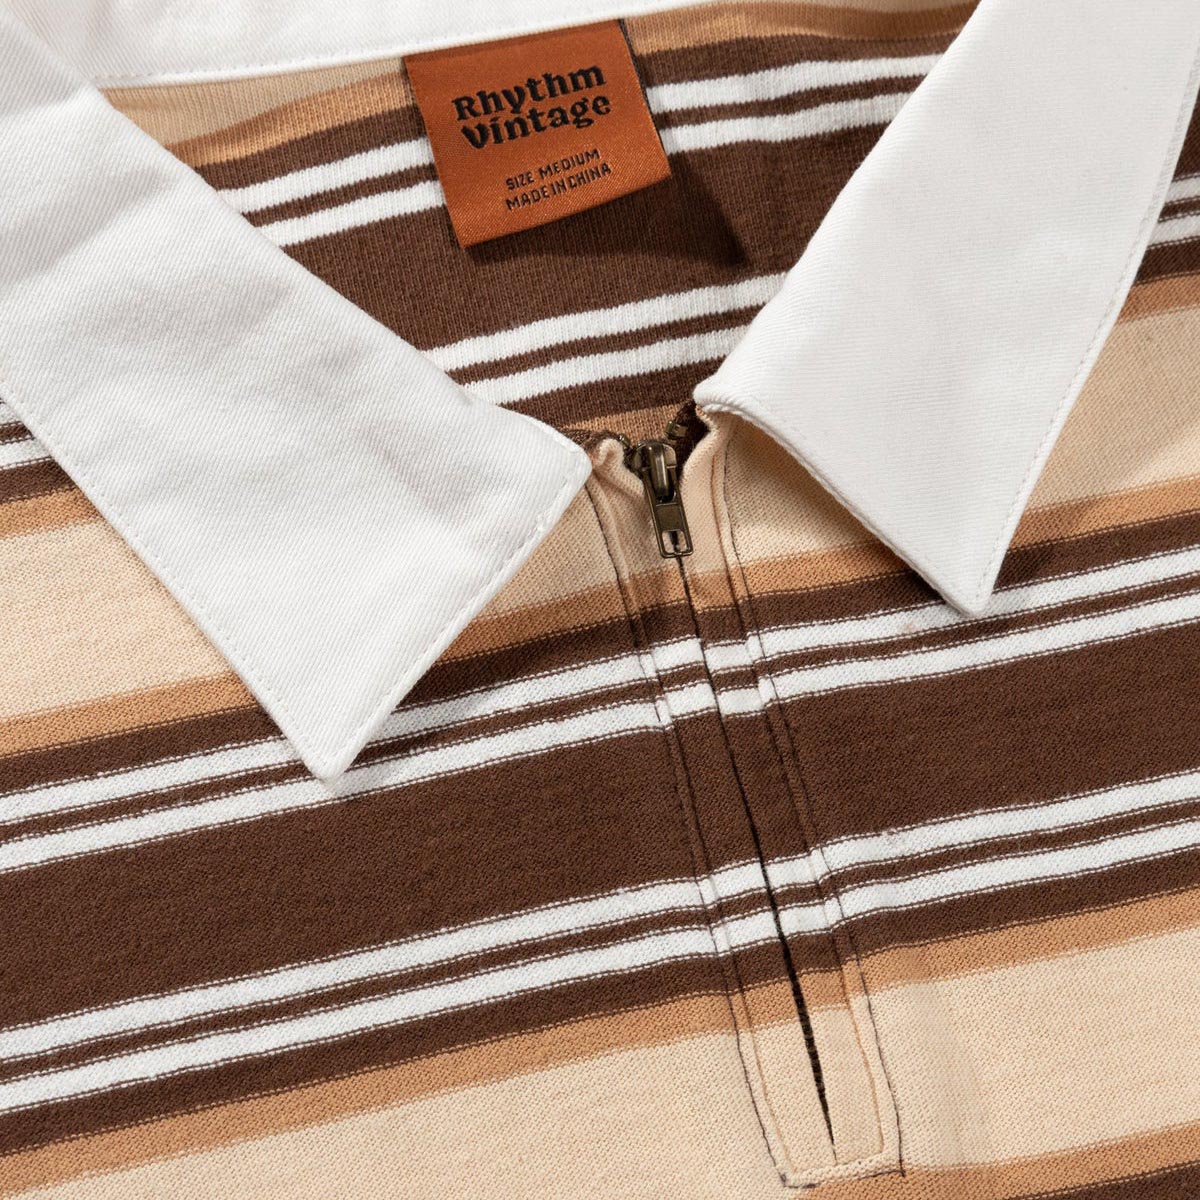 Rhythm Vintage Stripe Polo Long Sleeve Shirt - Coffee image 3